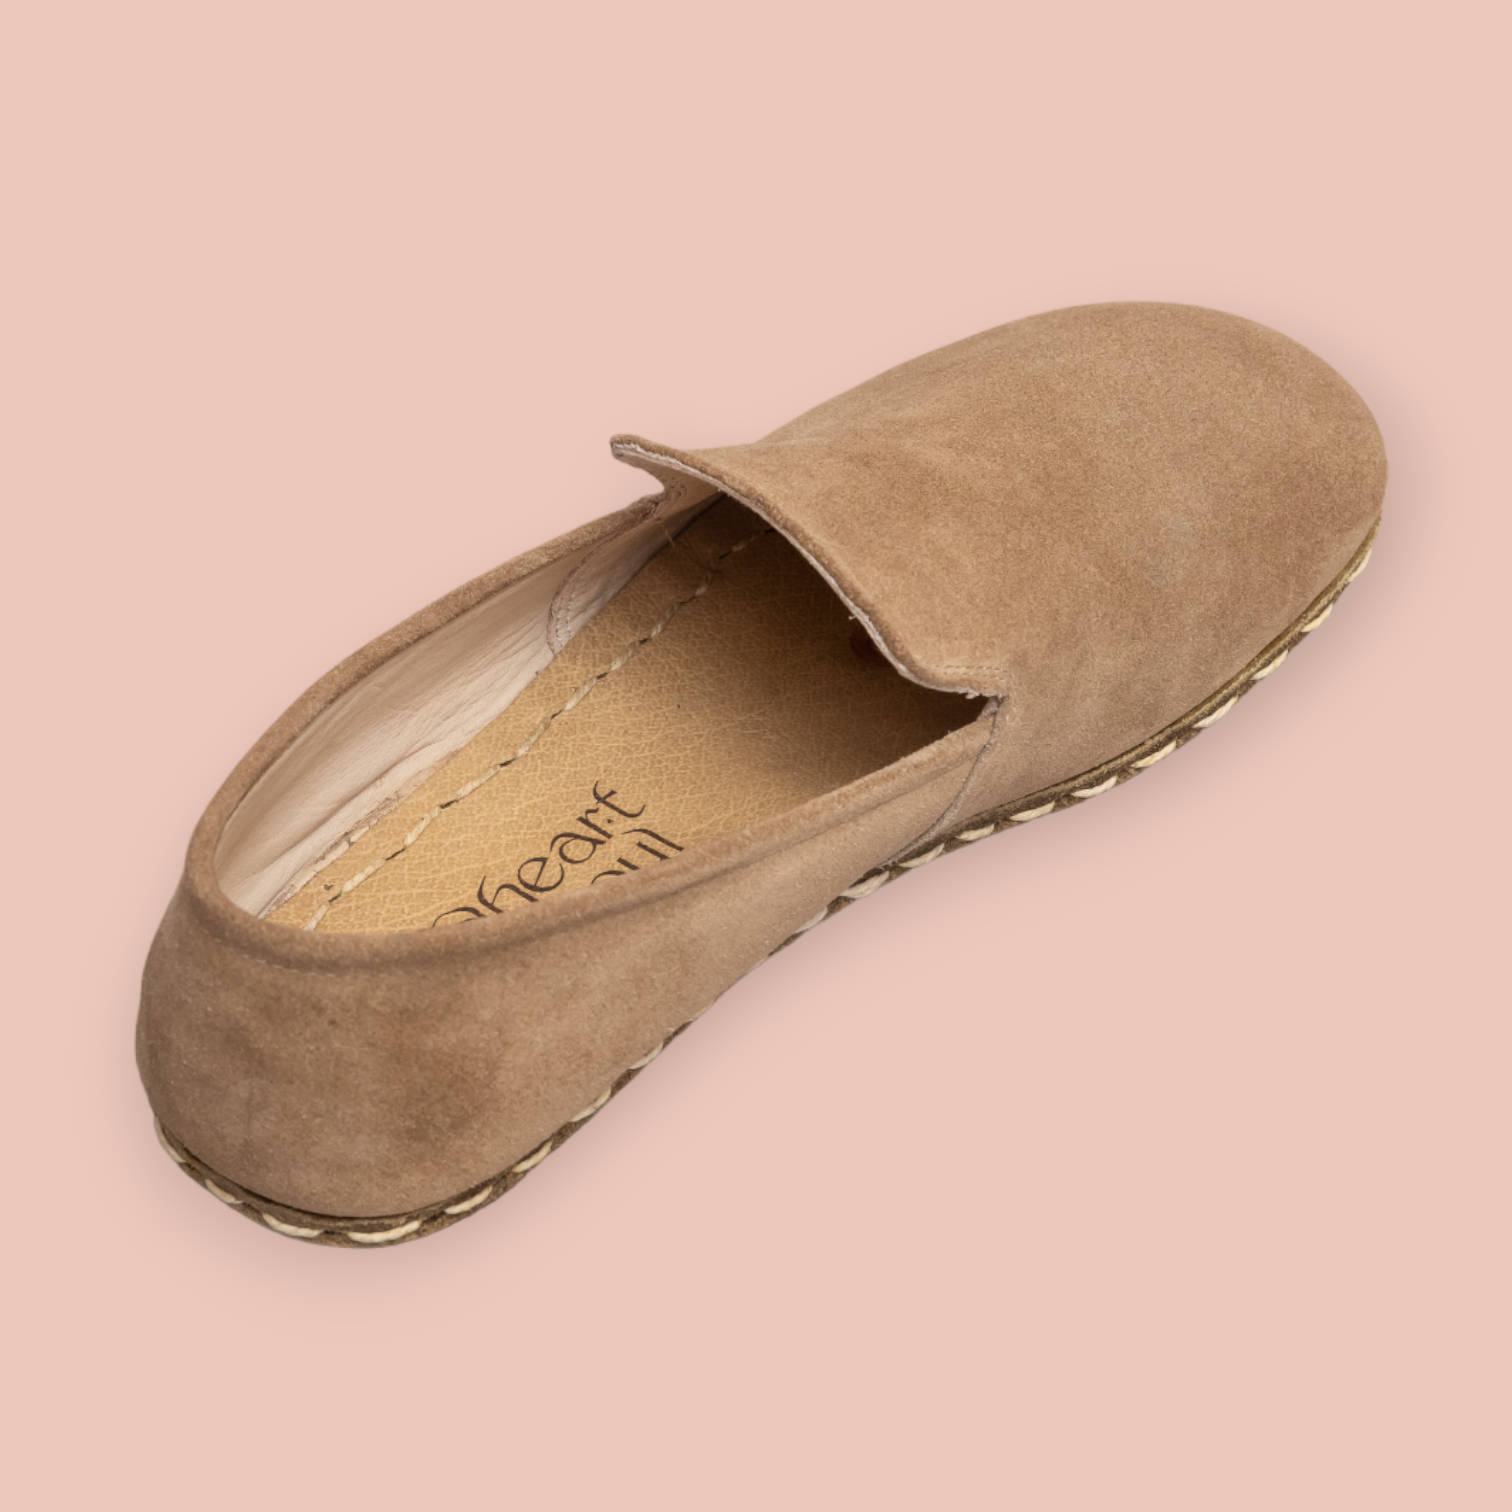 Her Patara Suede Yari Barefoot Grounding Shoes